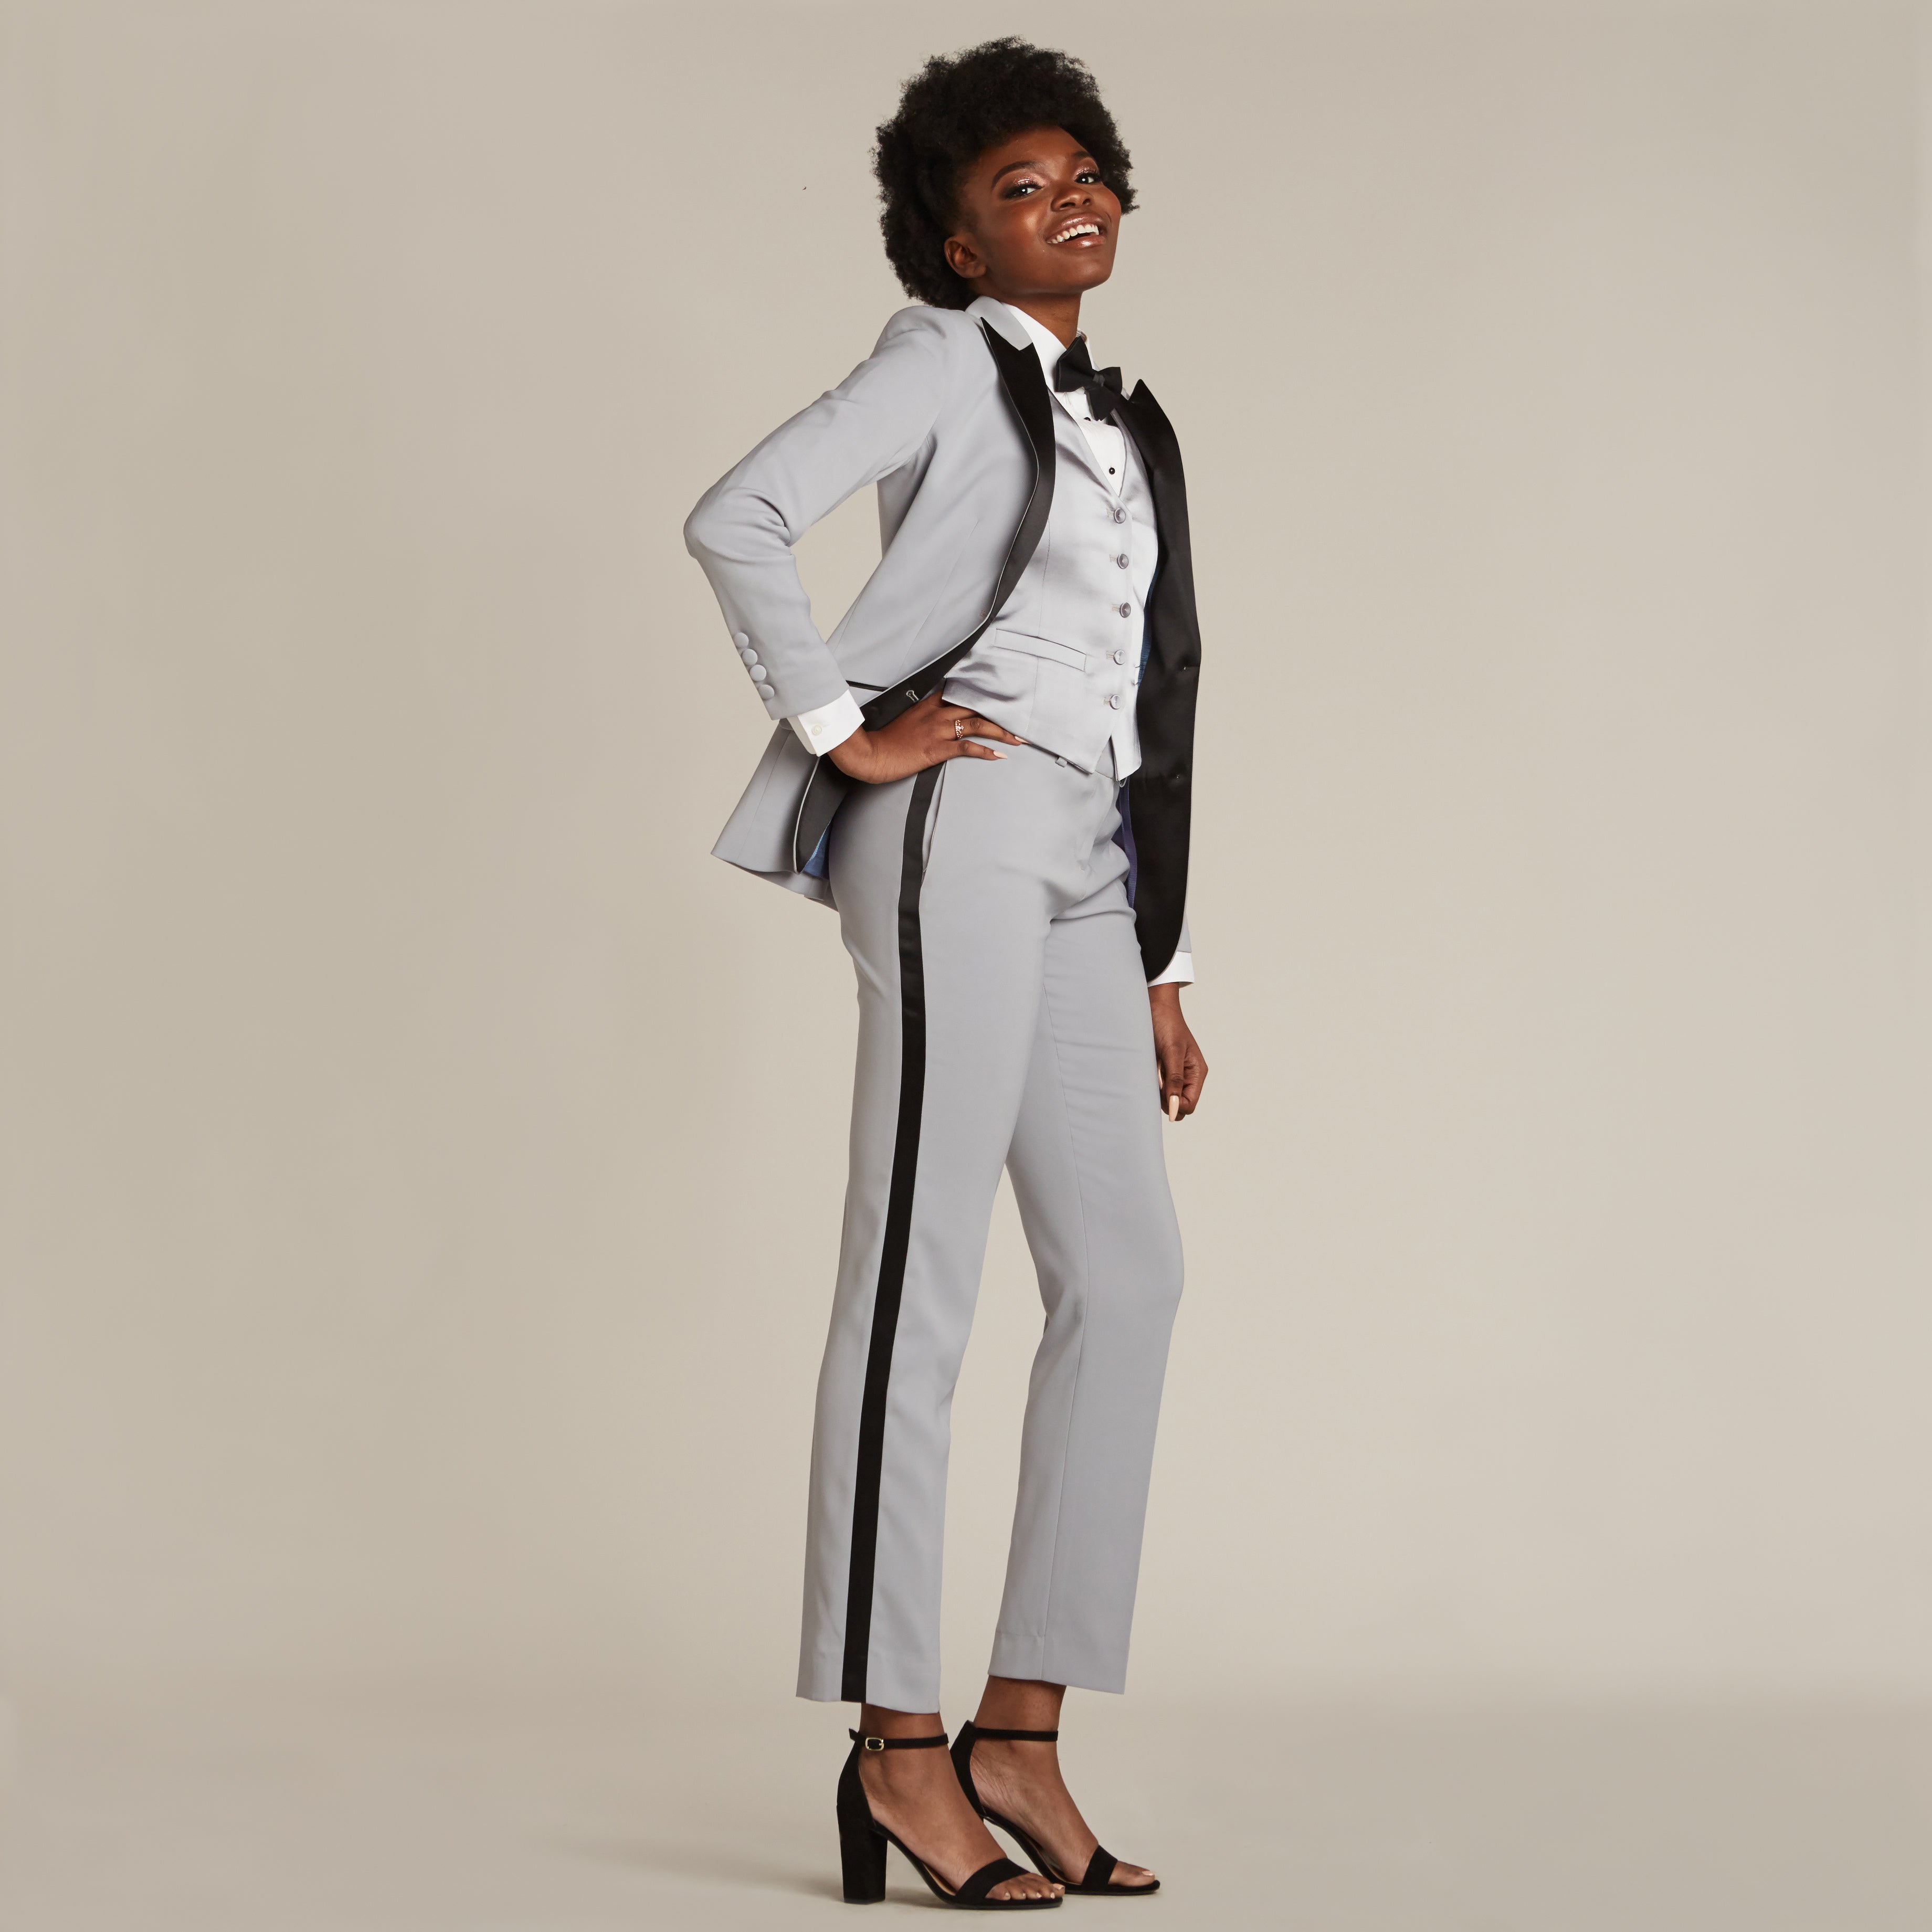 Buy Women's 3 Piece Office Work Suit Blazer Vest Pants Business Outfits Pants  Suit Set Prom Party Suit, Teal Blue, X-Small at Amazon.in